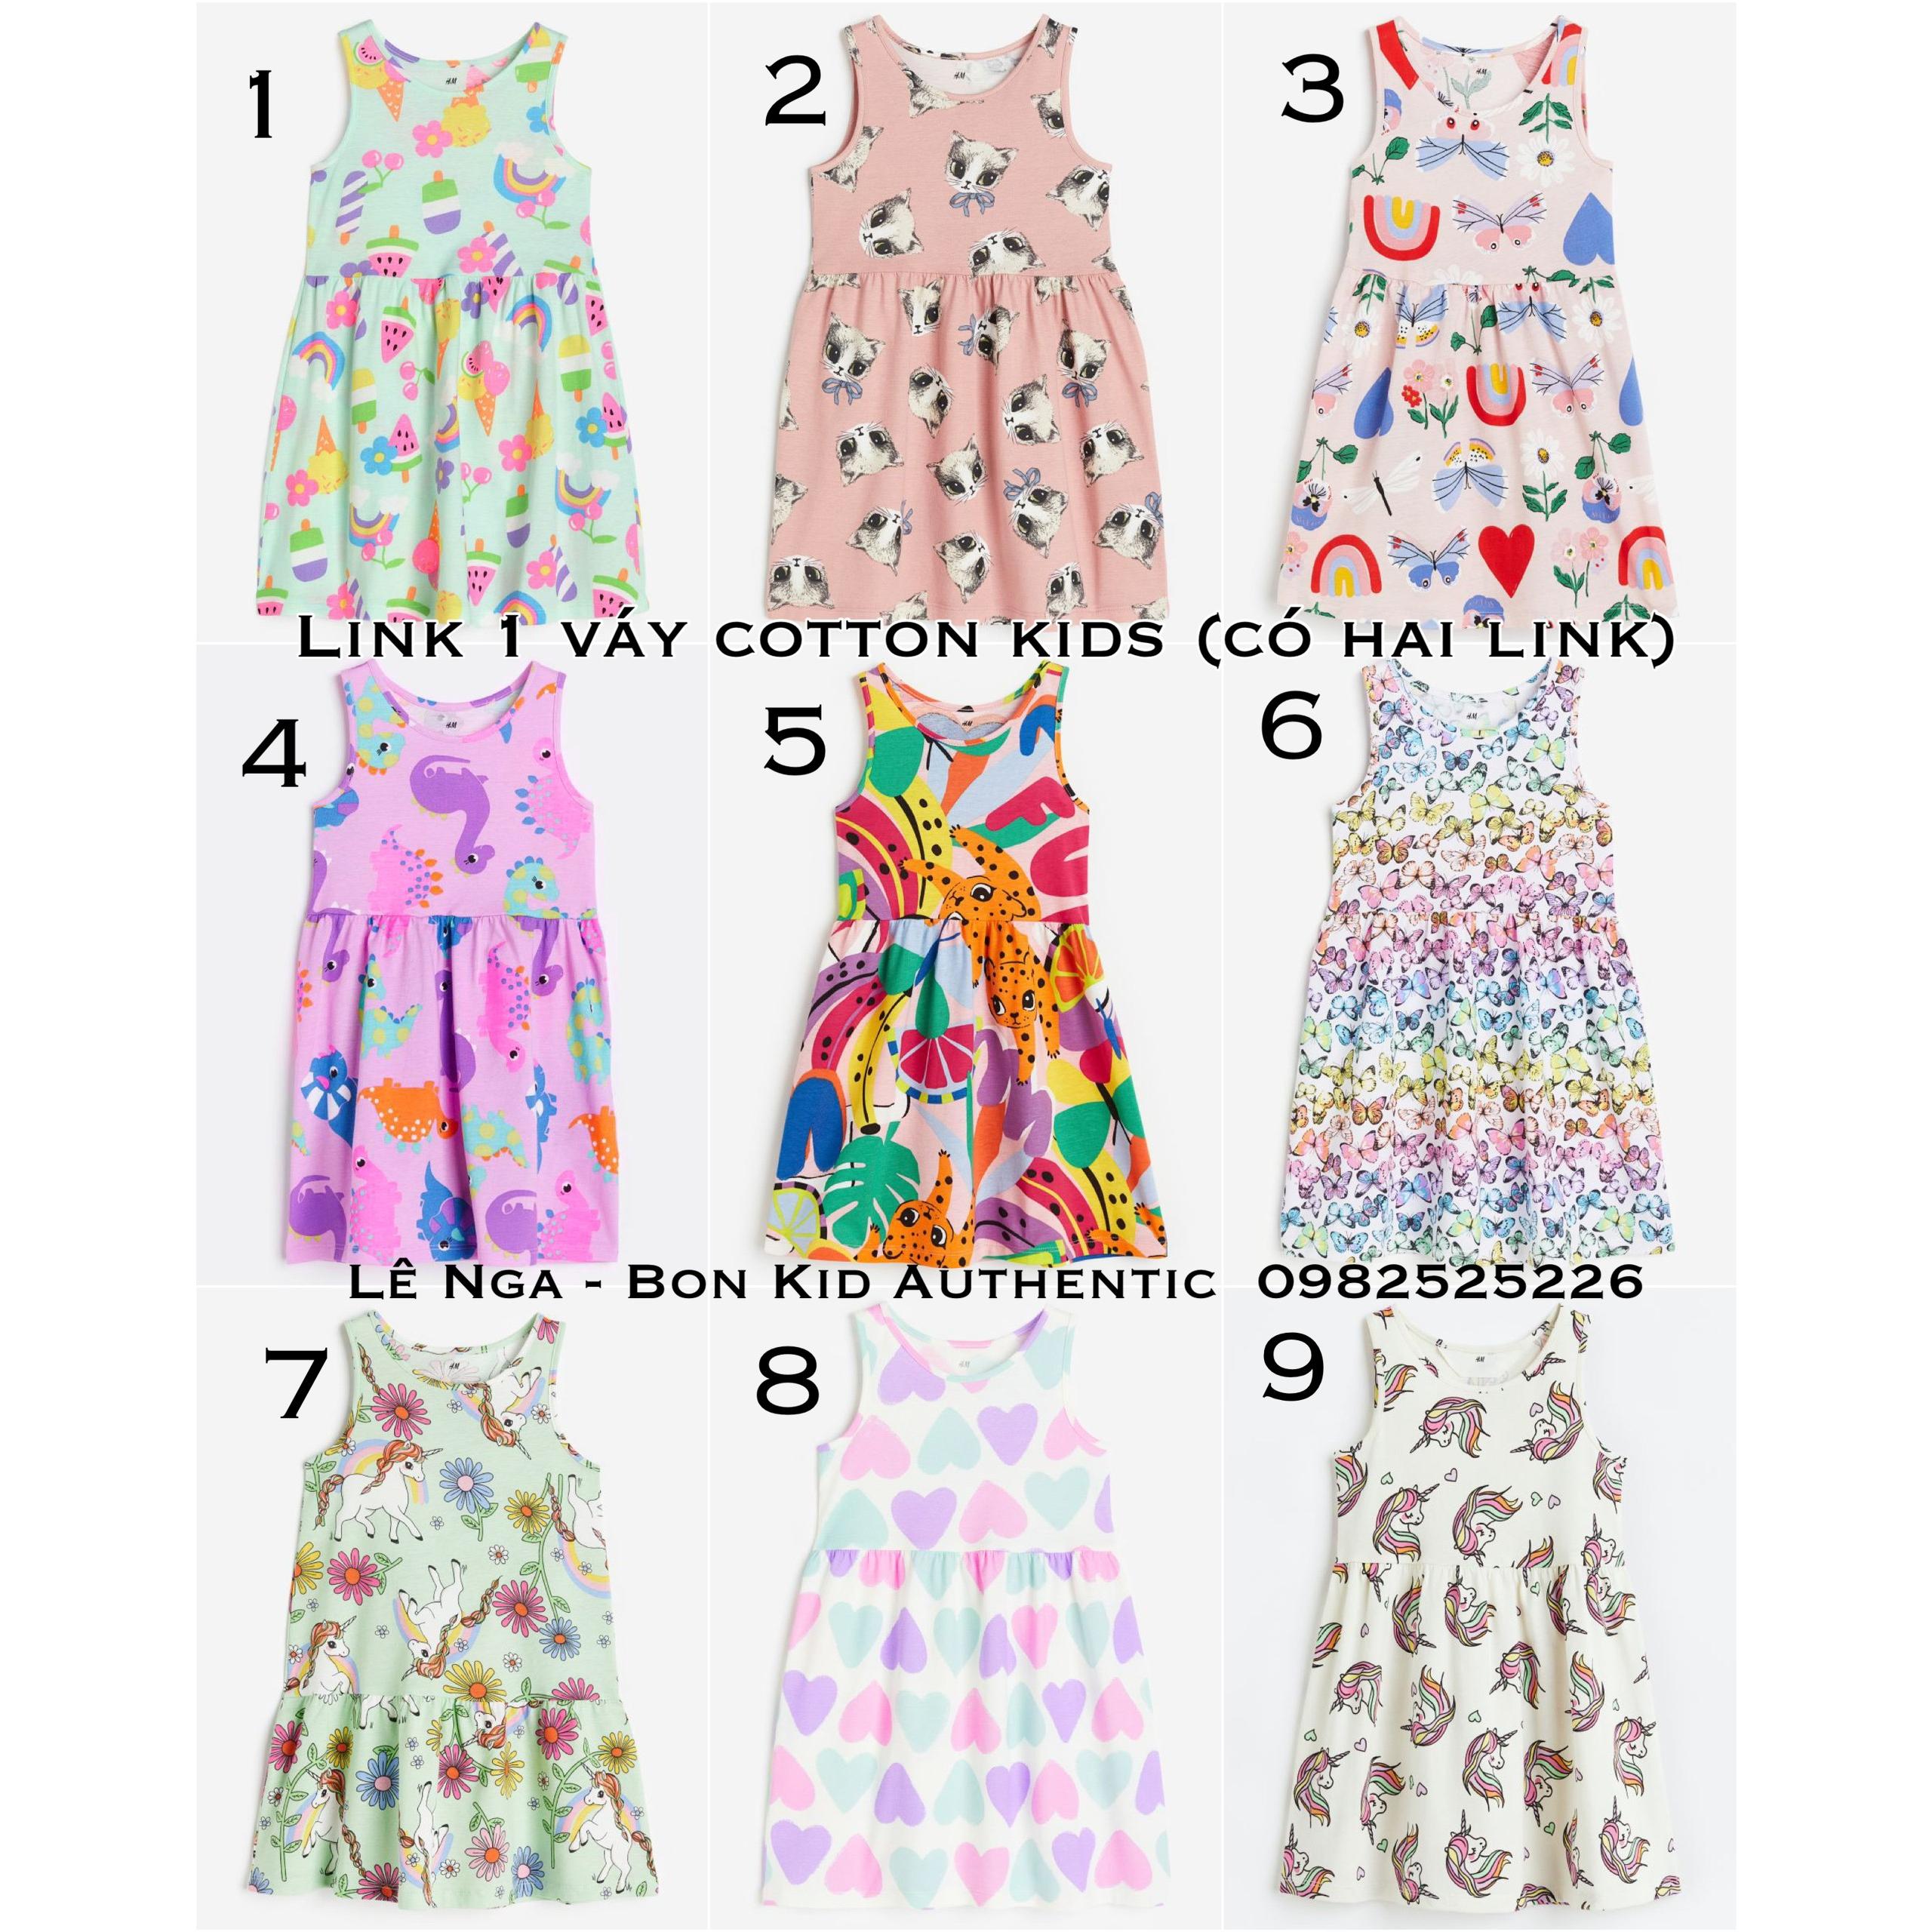 Váy cotton kid HM UK/US/JP sz 1.5-2, 2-4, 4-6, 6-8, 8-10 (CÓ HAI LINK)